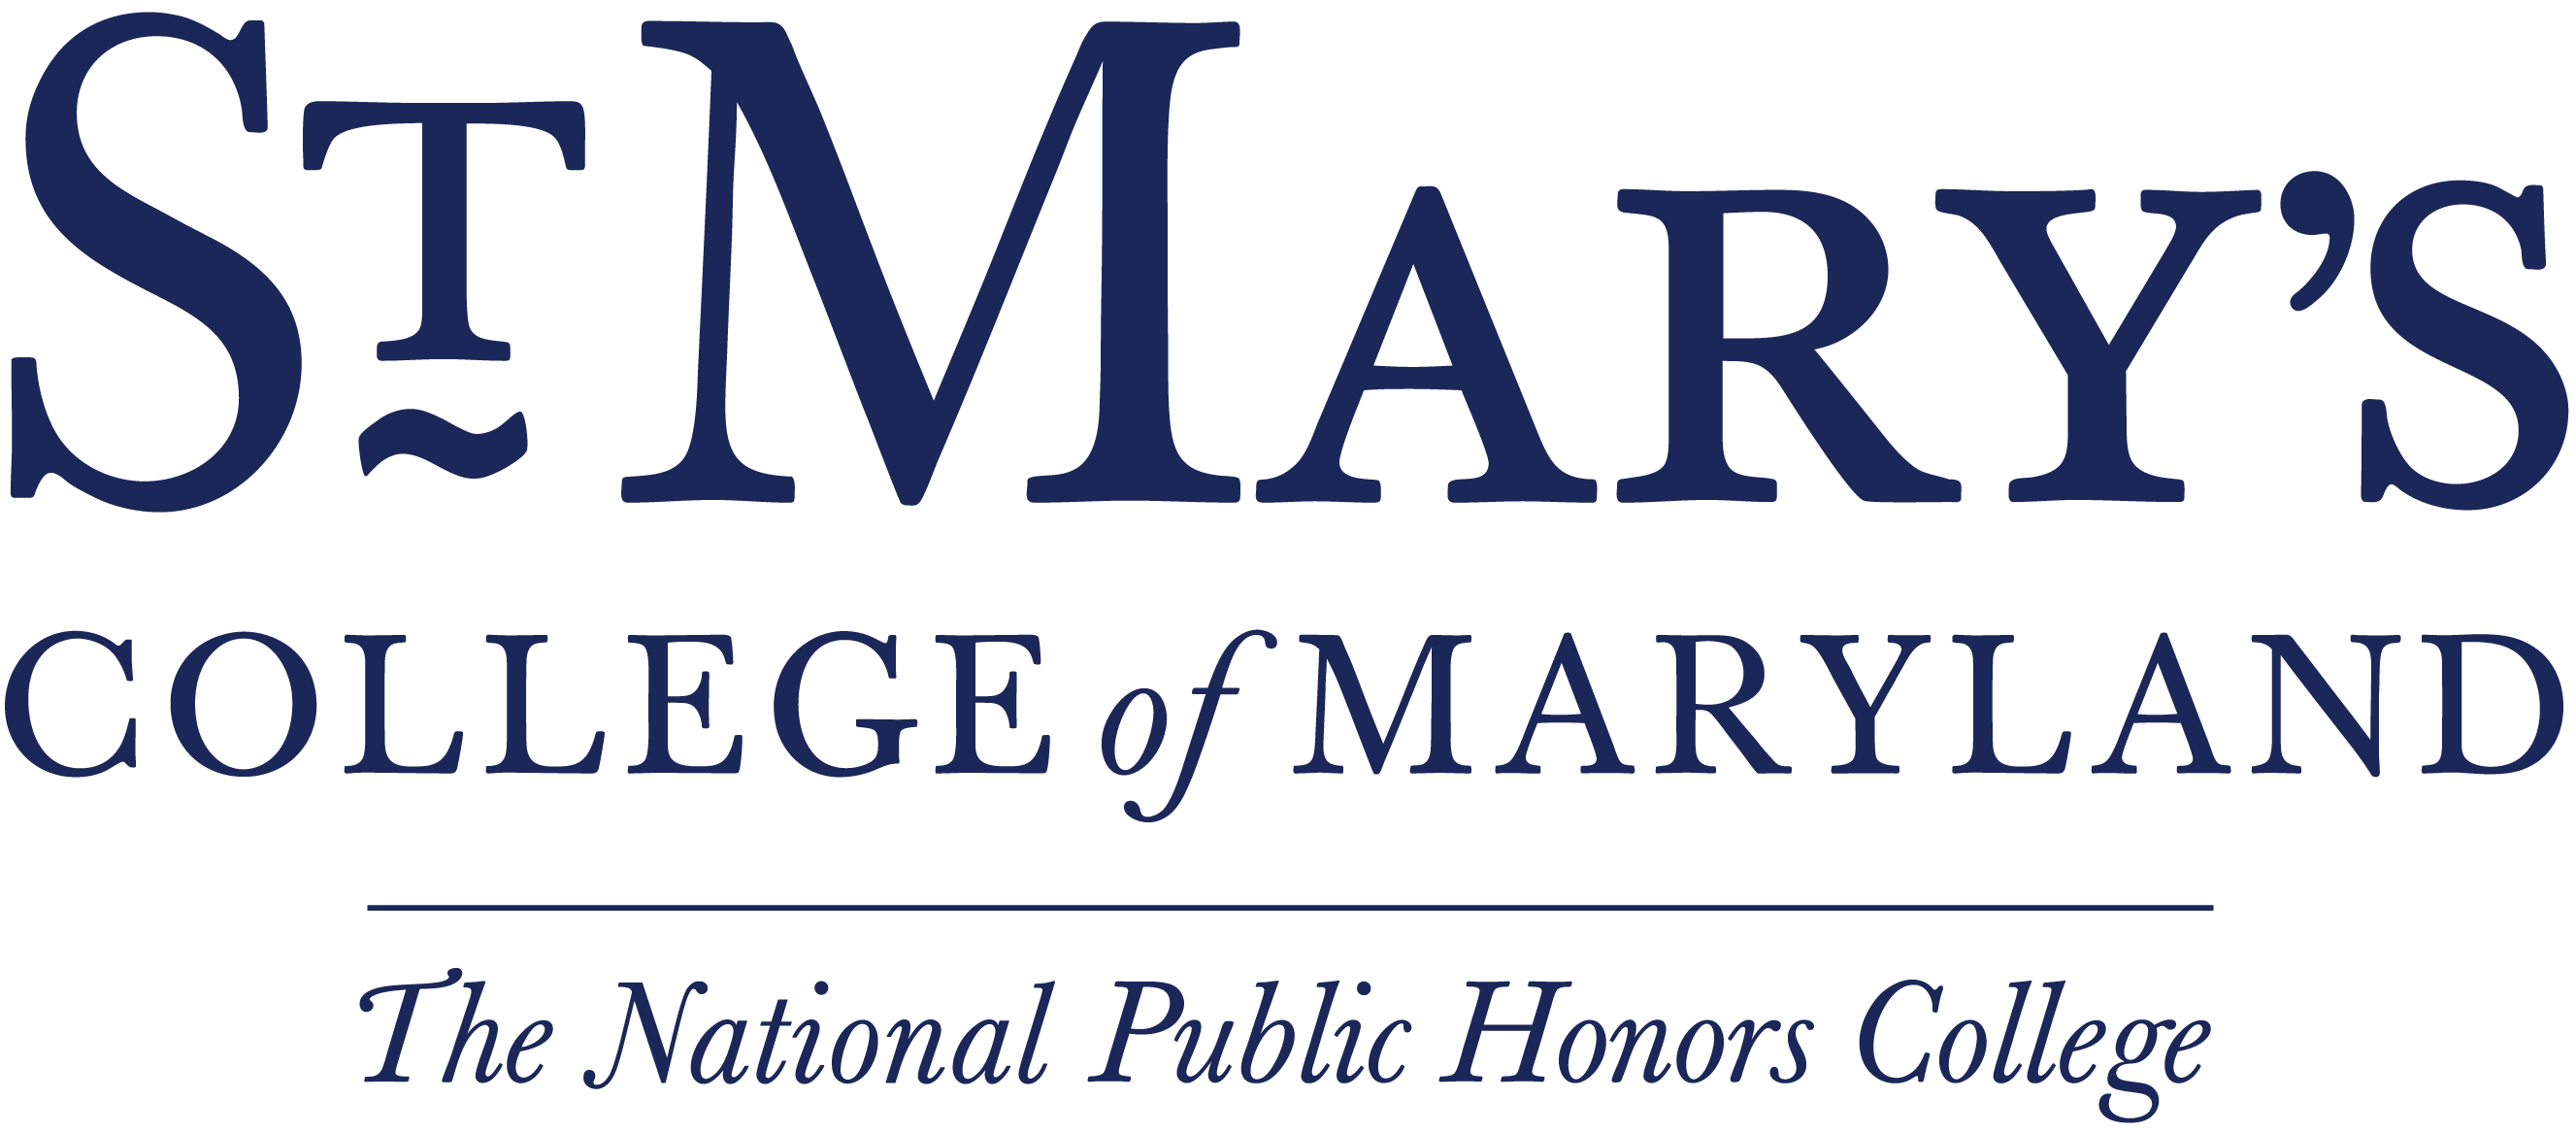 Saint Mary's College of Maryland logo